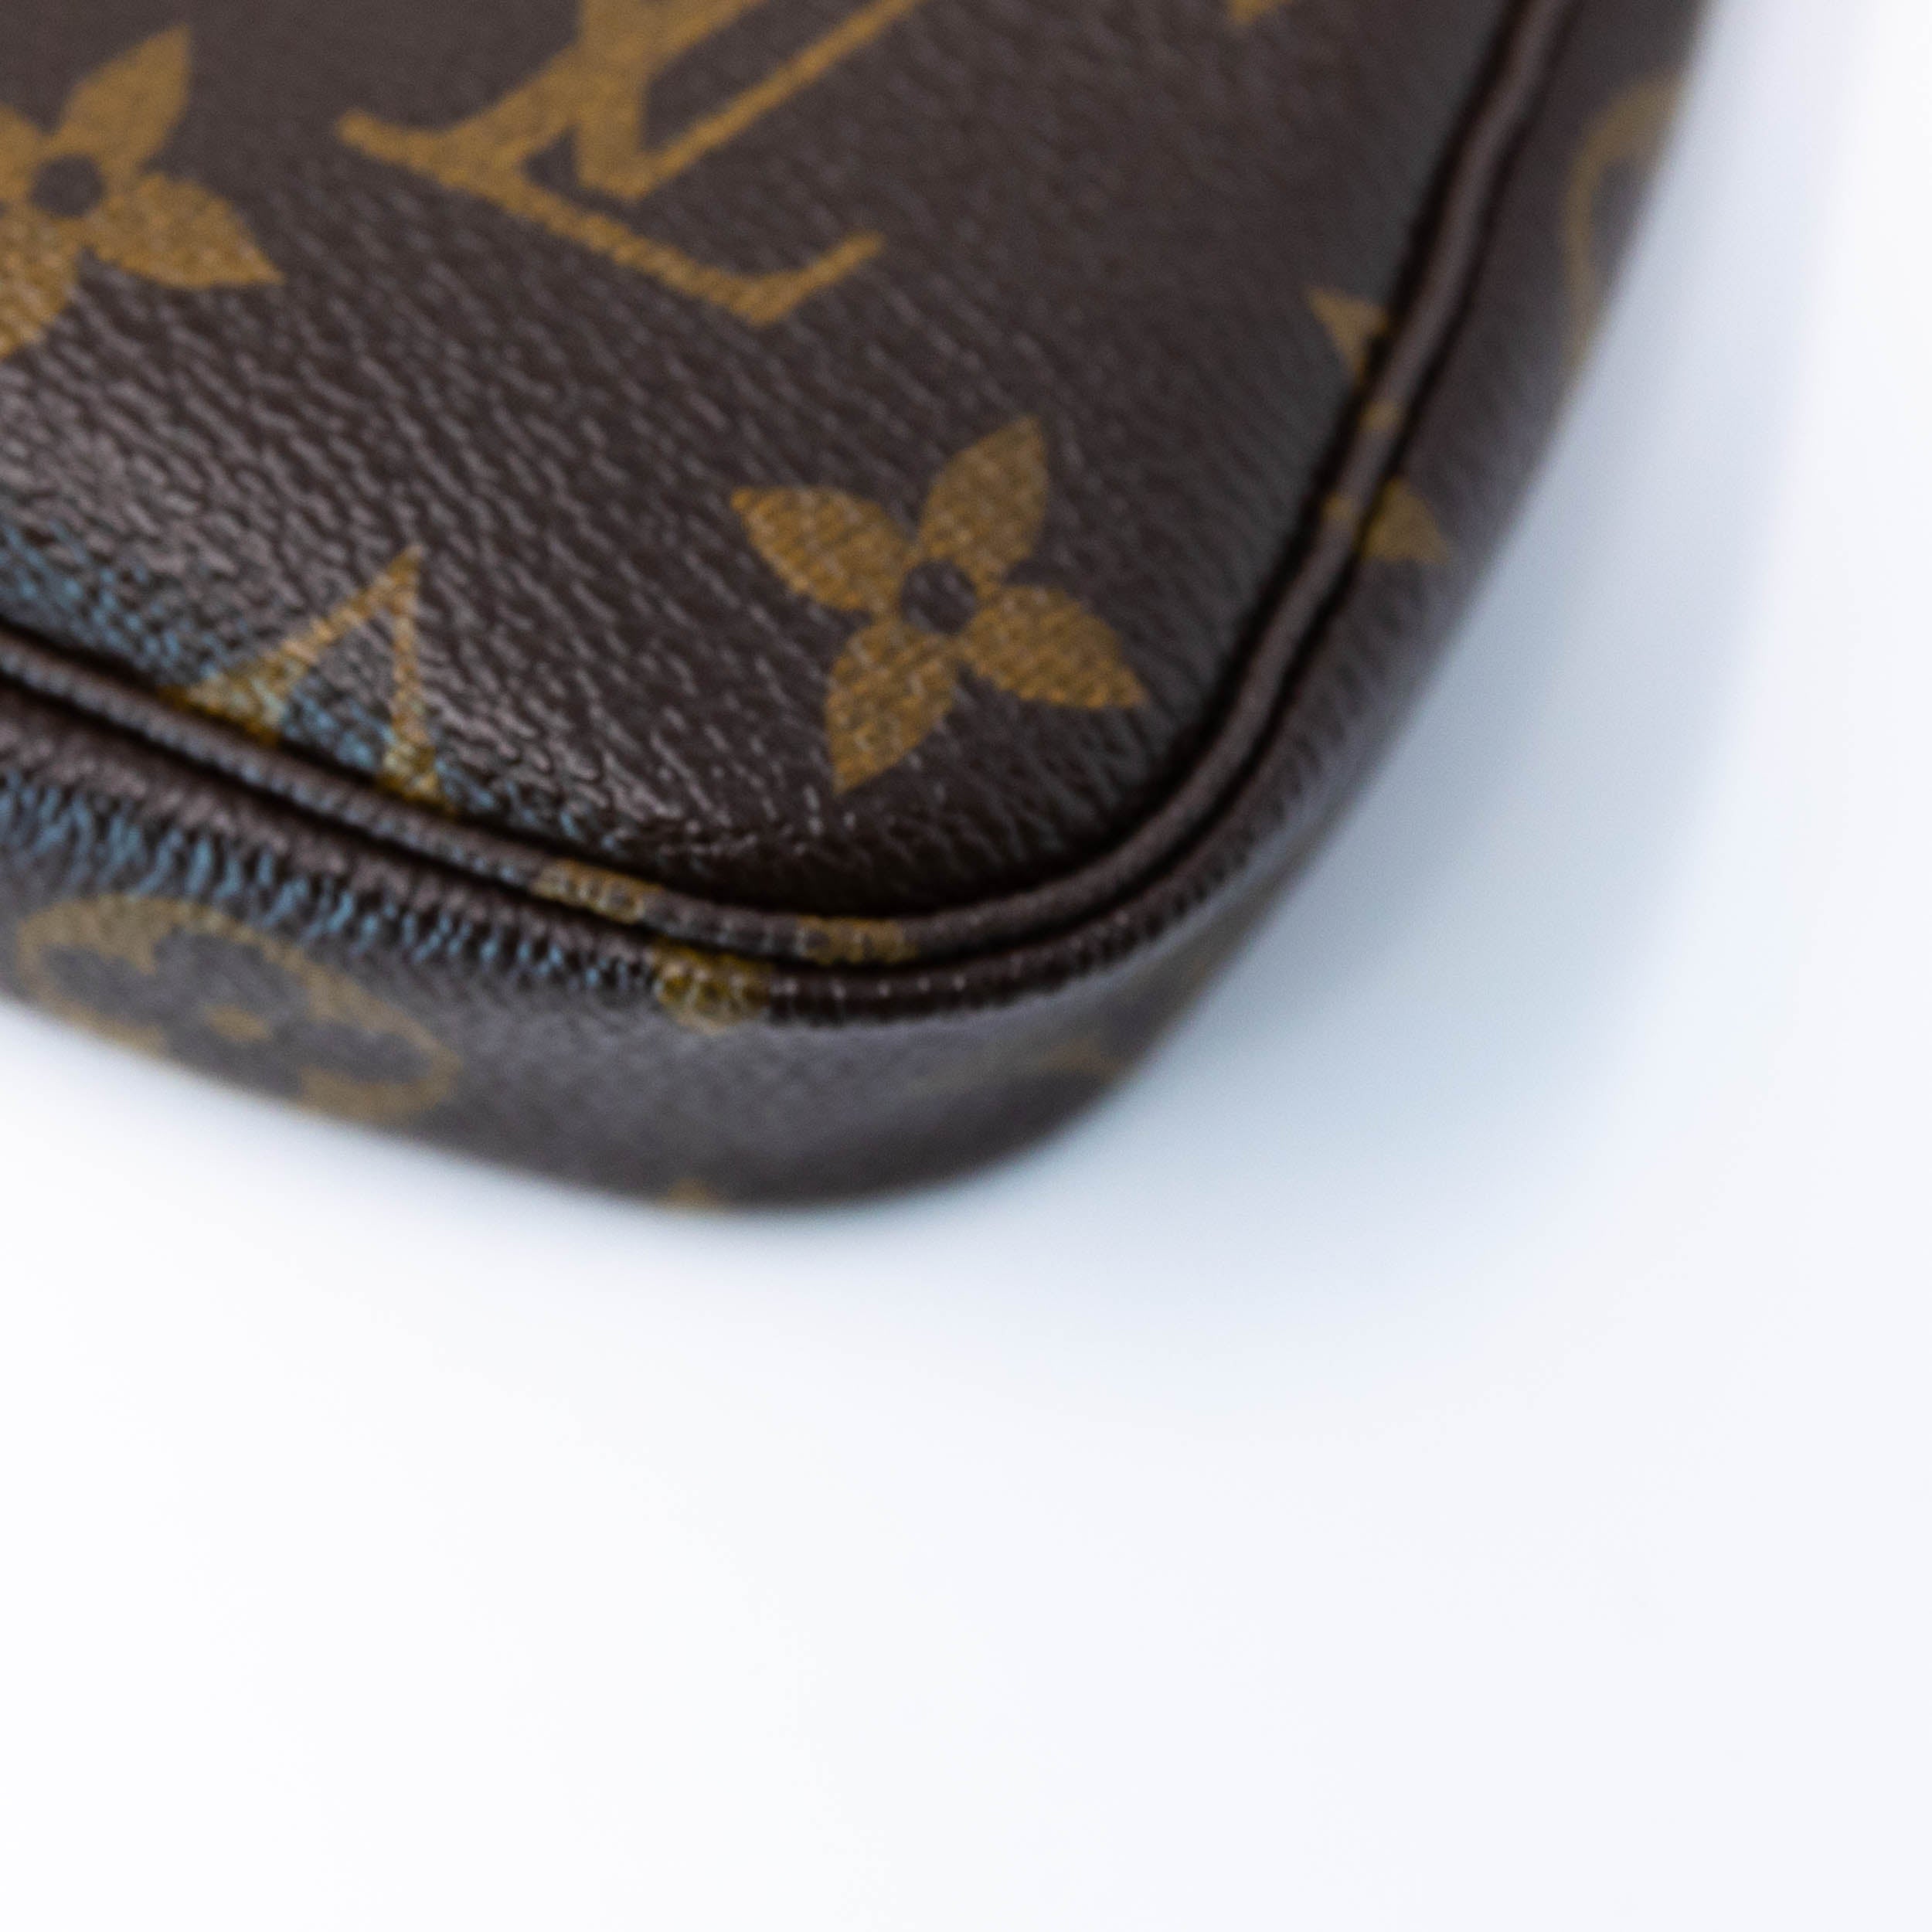 Louis Vuitton Trunks & Bags Monogram Mini Pochette